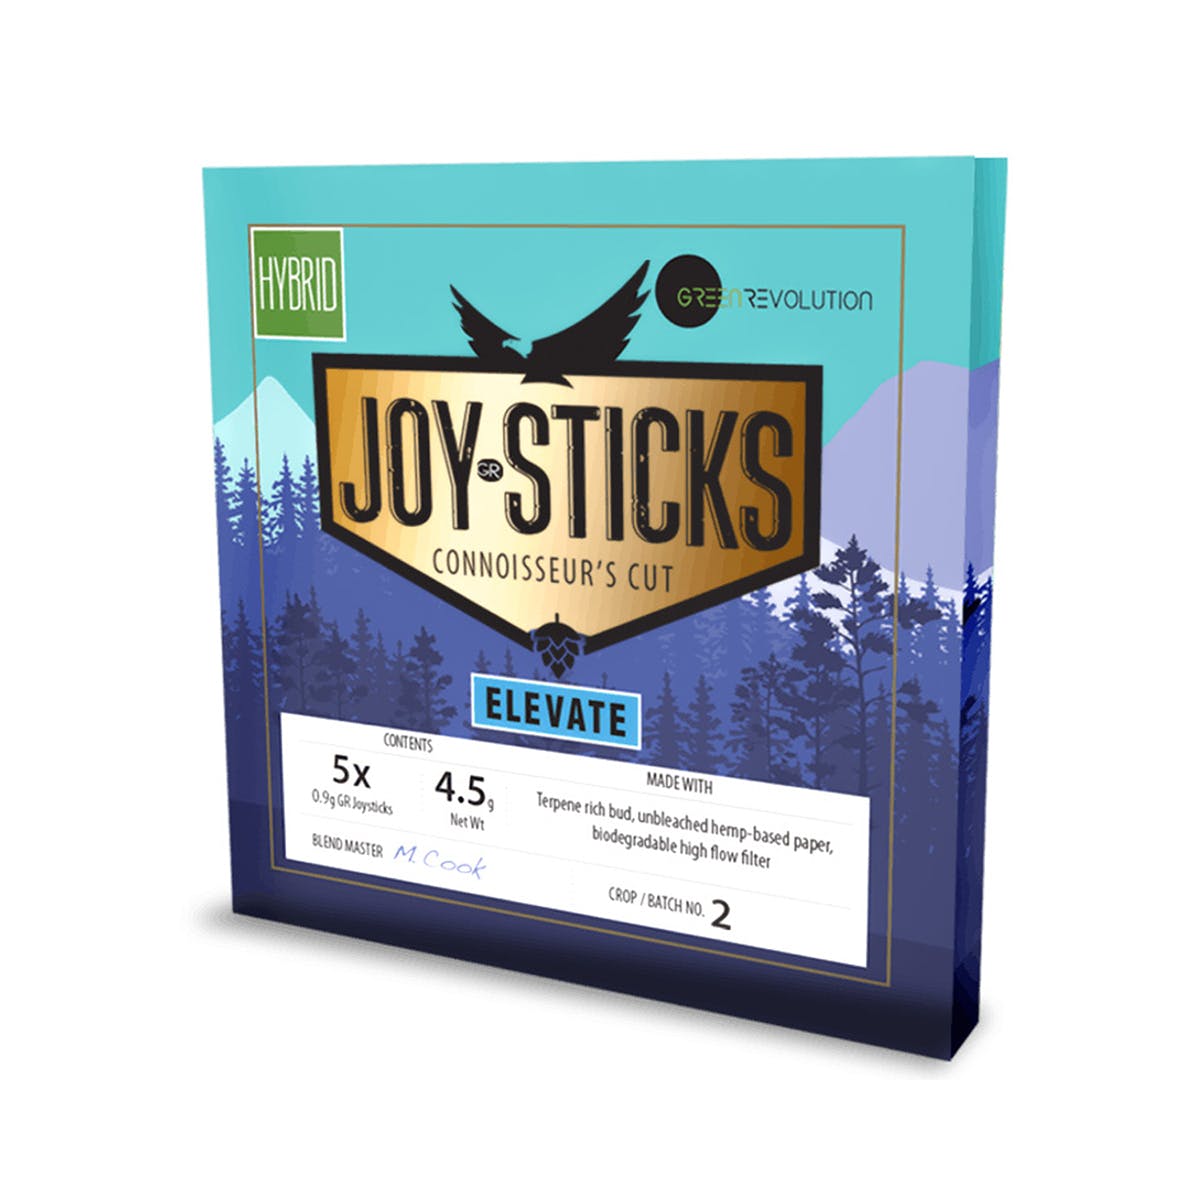 Joysticks - Elevate 5x (4.5g)